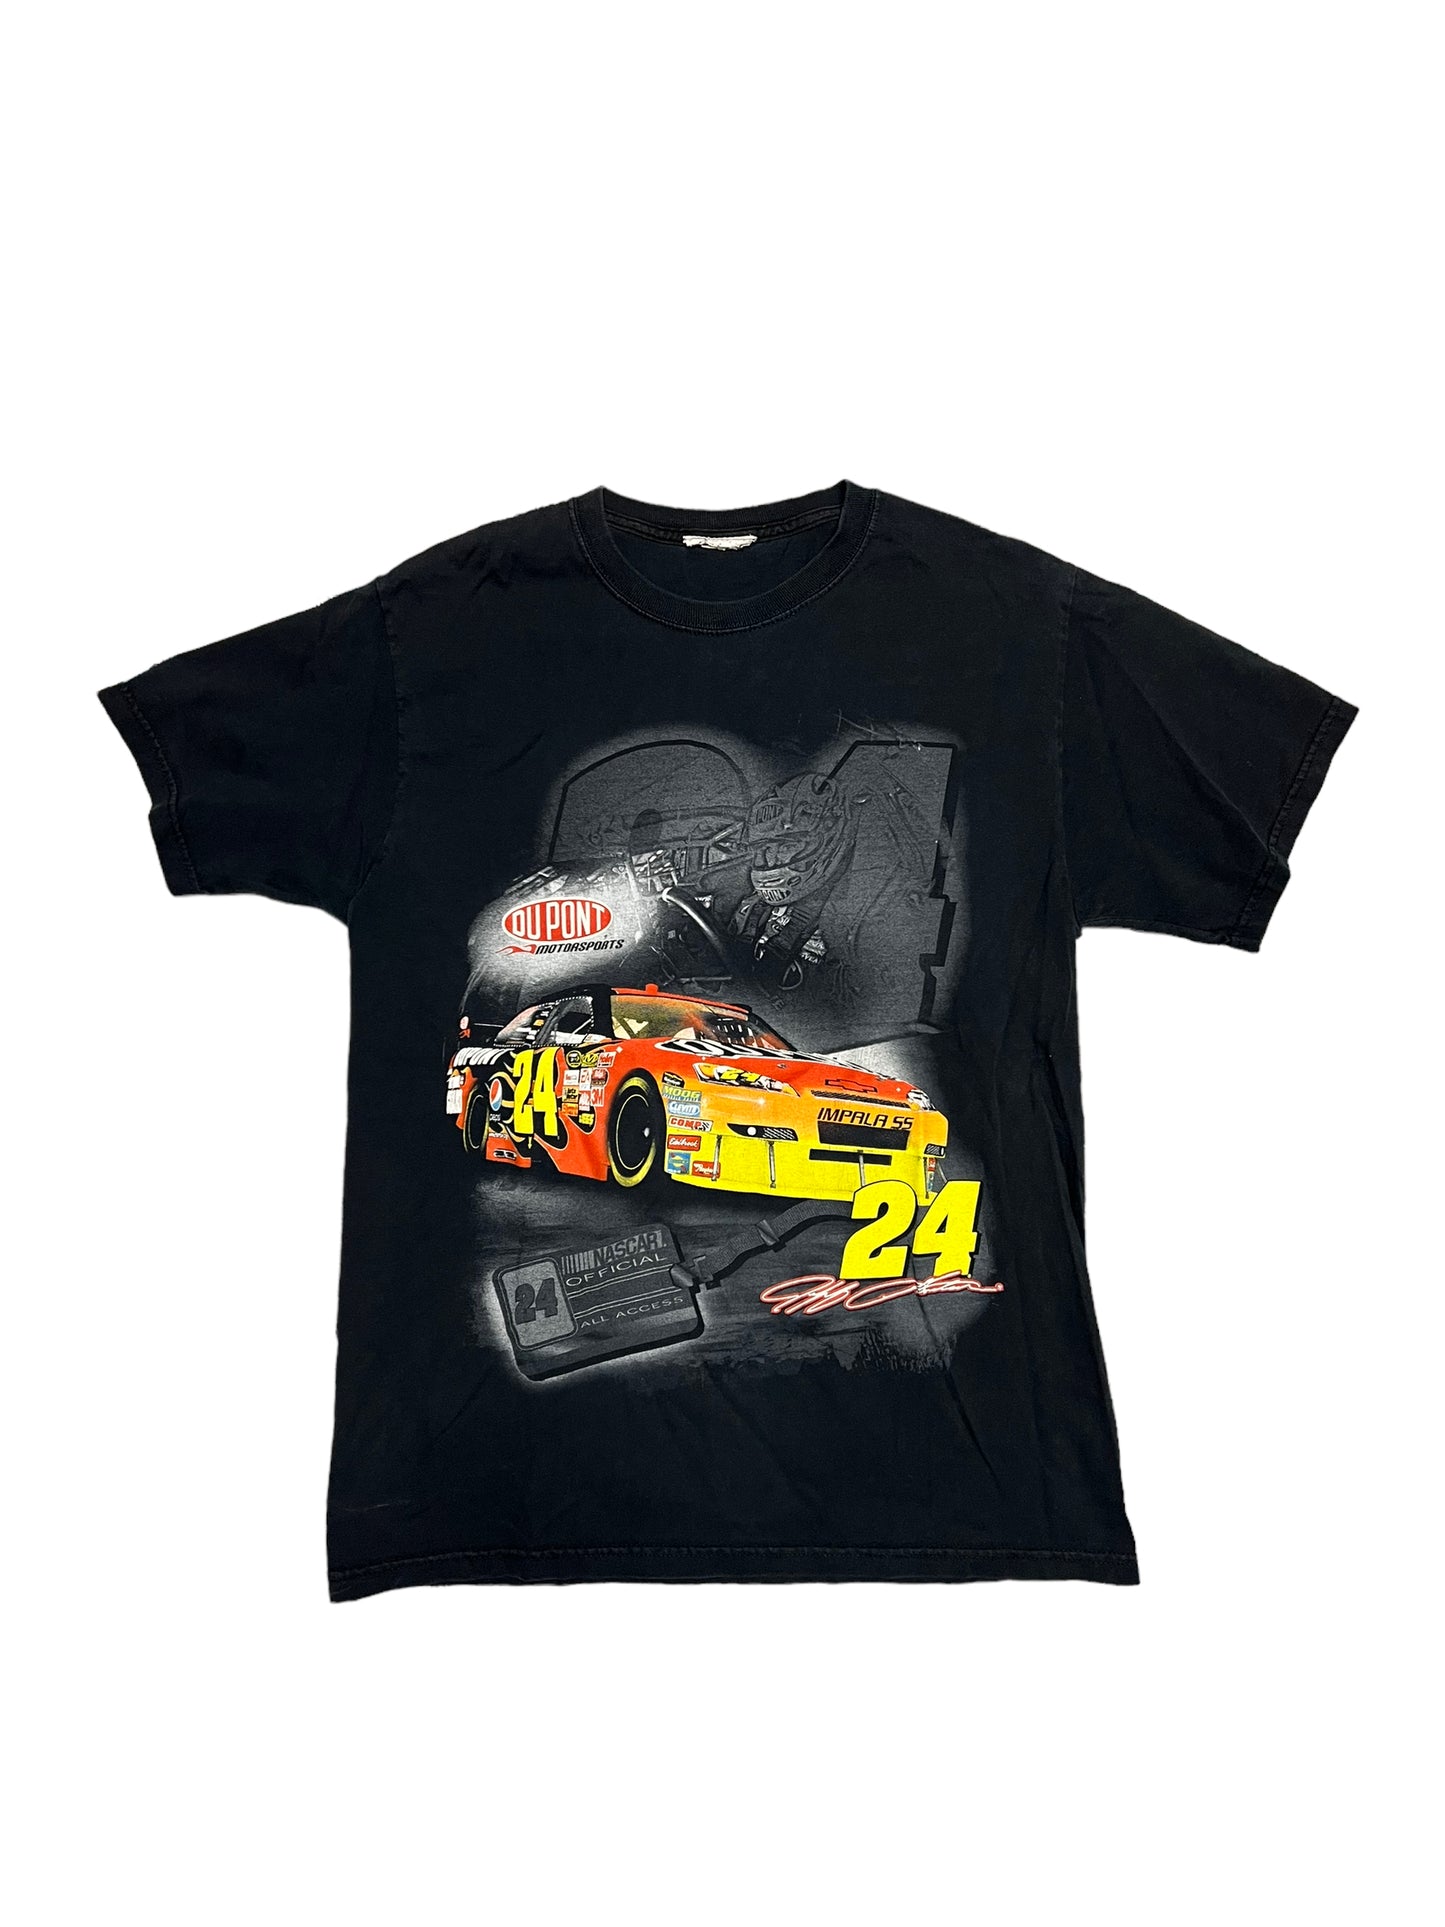 Vintage Jeff Gordon NASCAR Shirt